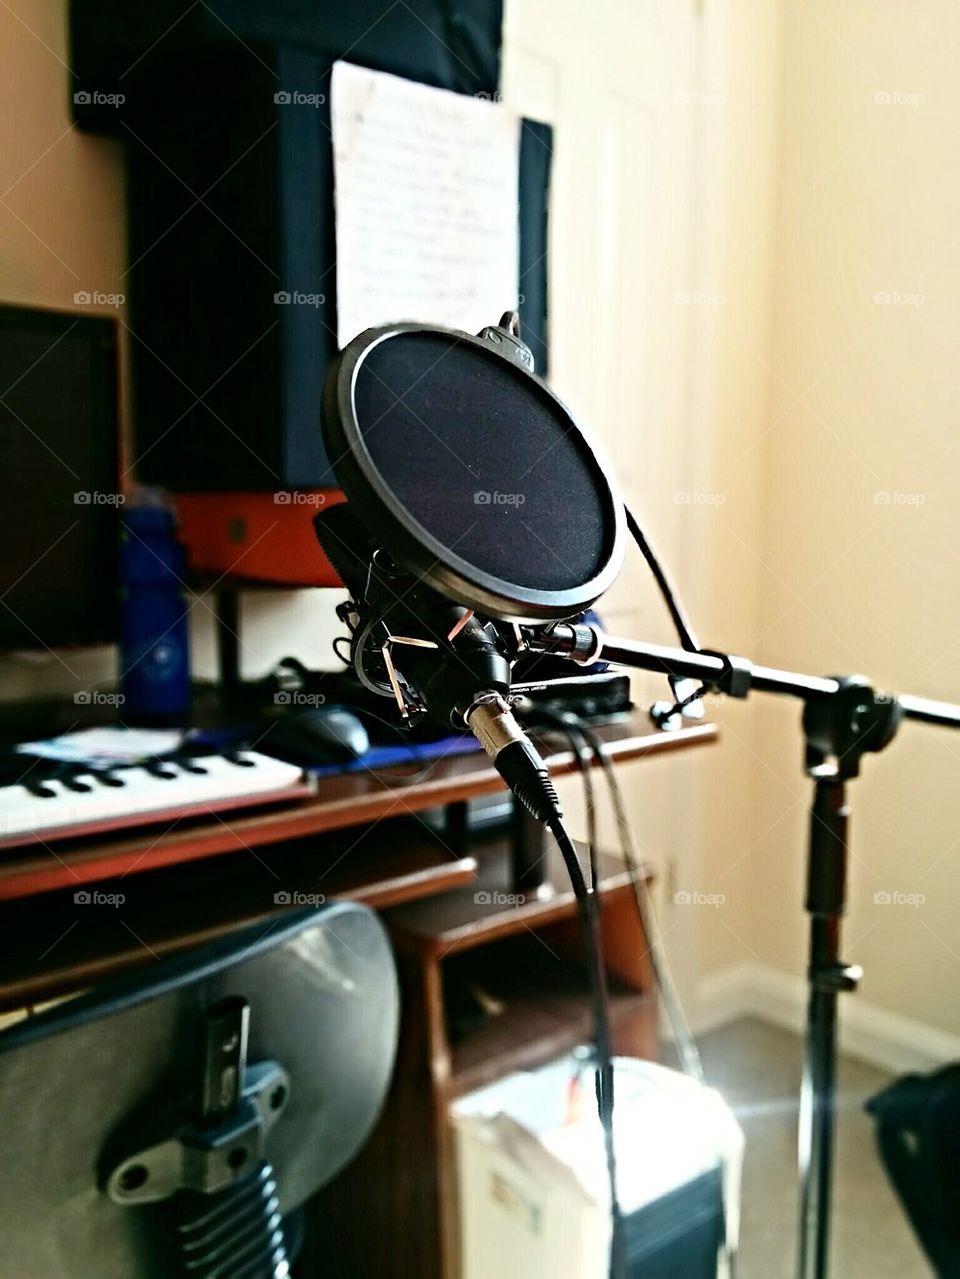 home studio